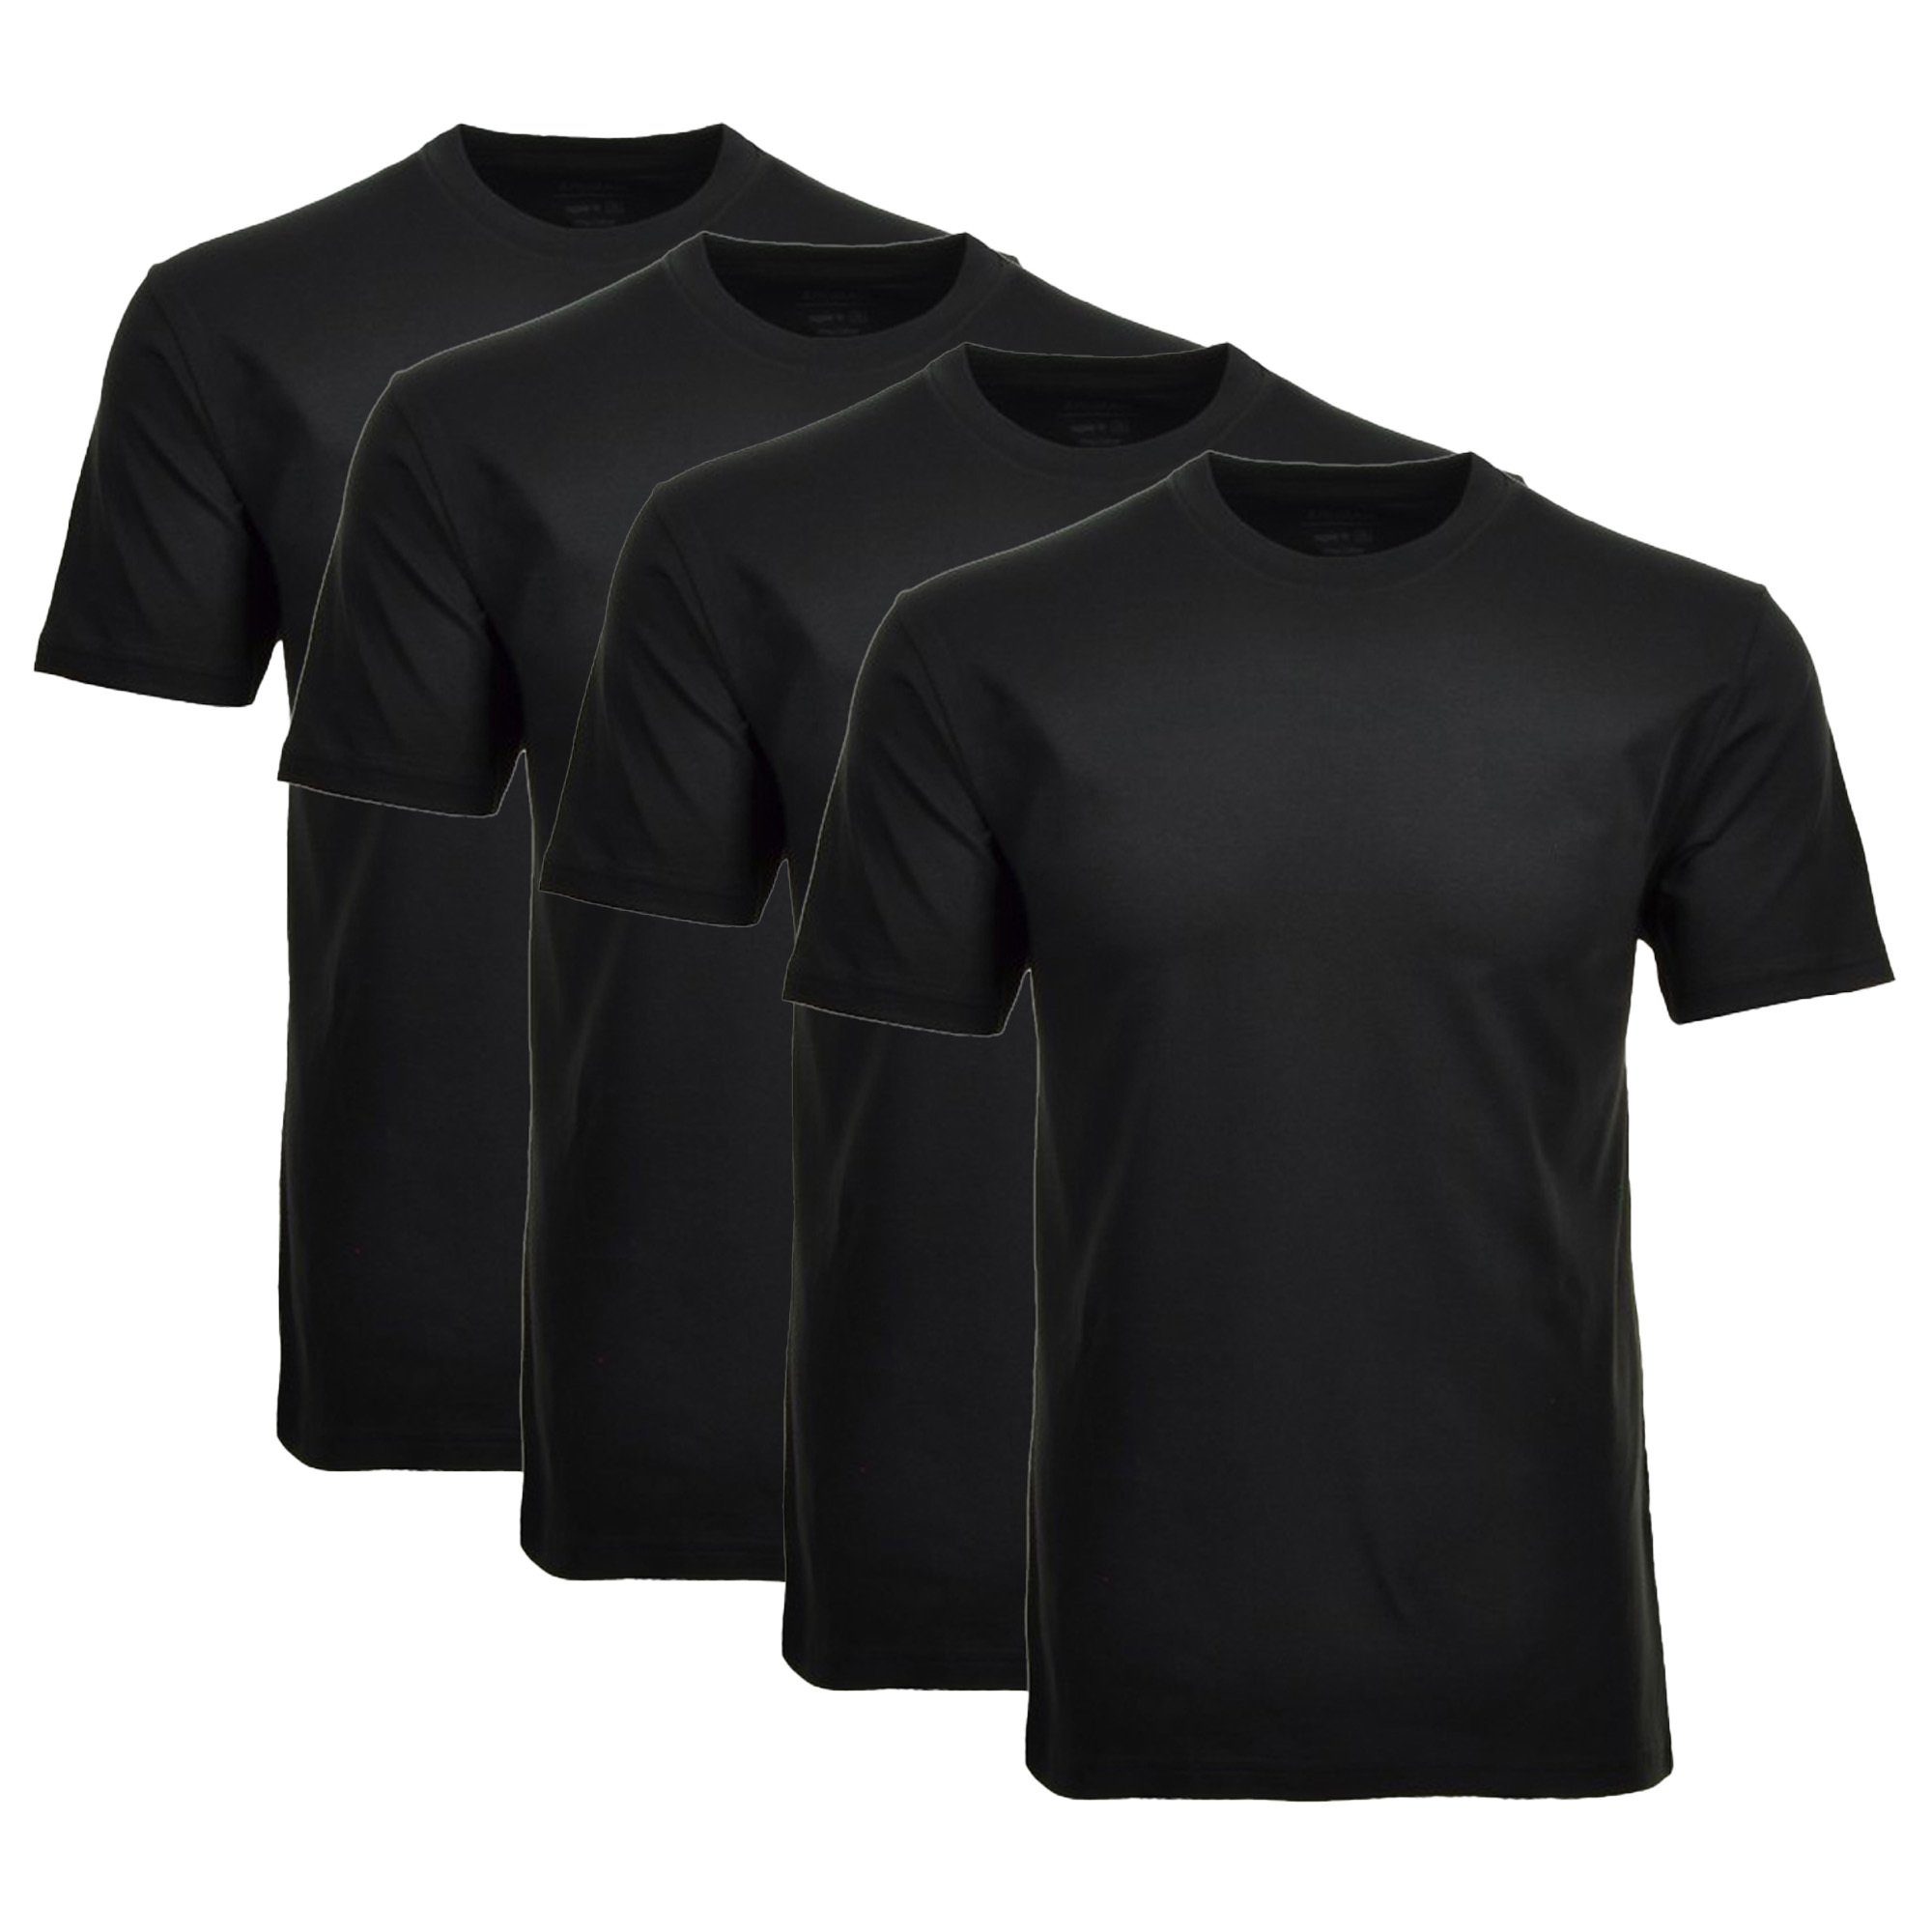 RAGMAN Unterhemd Herren T-Shirt 2er Pack - 1/2 Arm, Unterhemd Schwarz